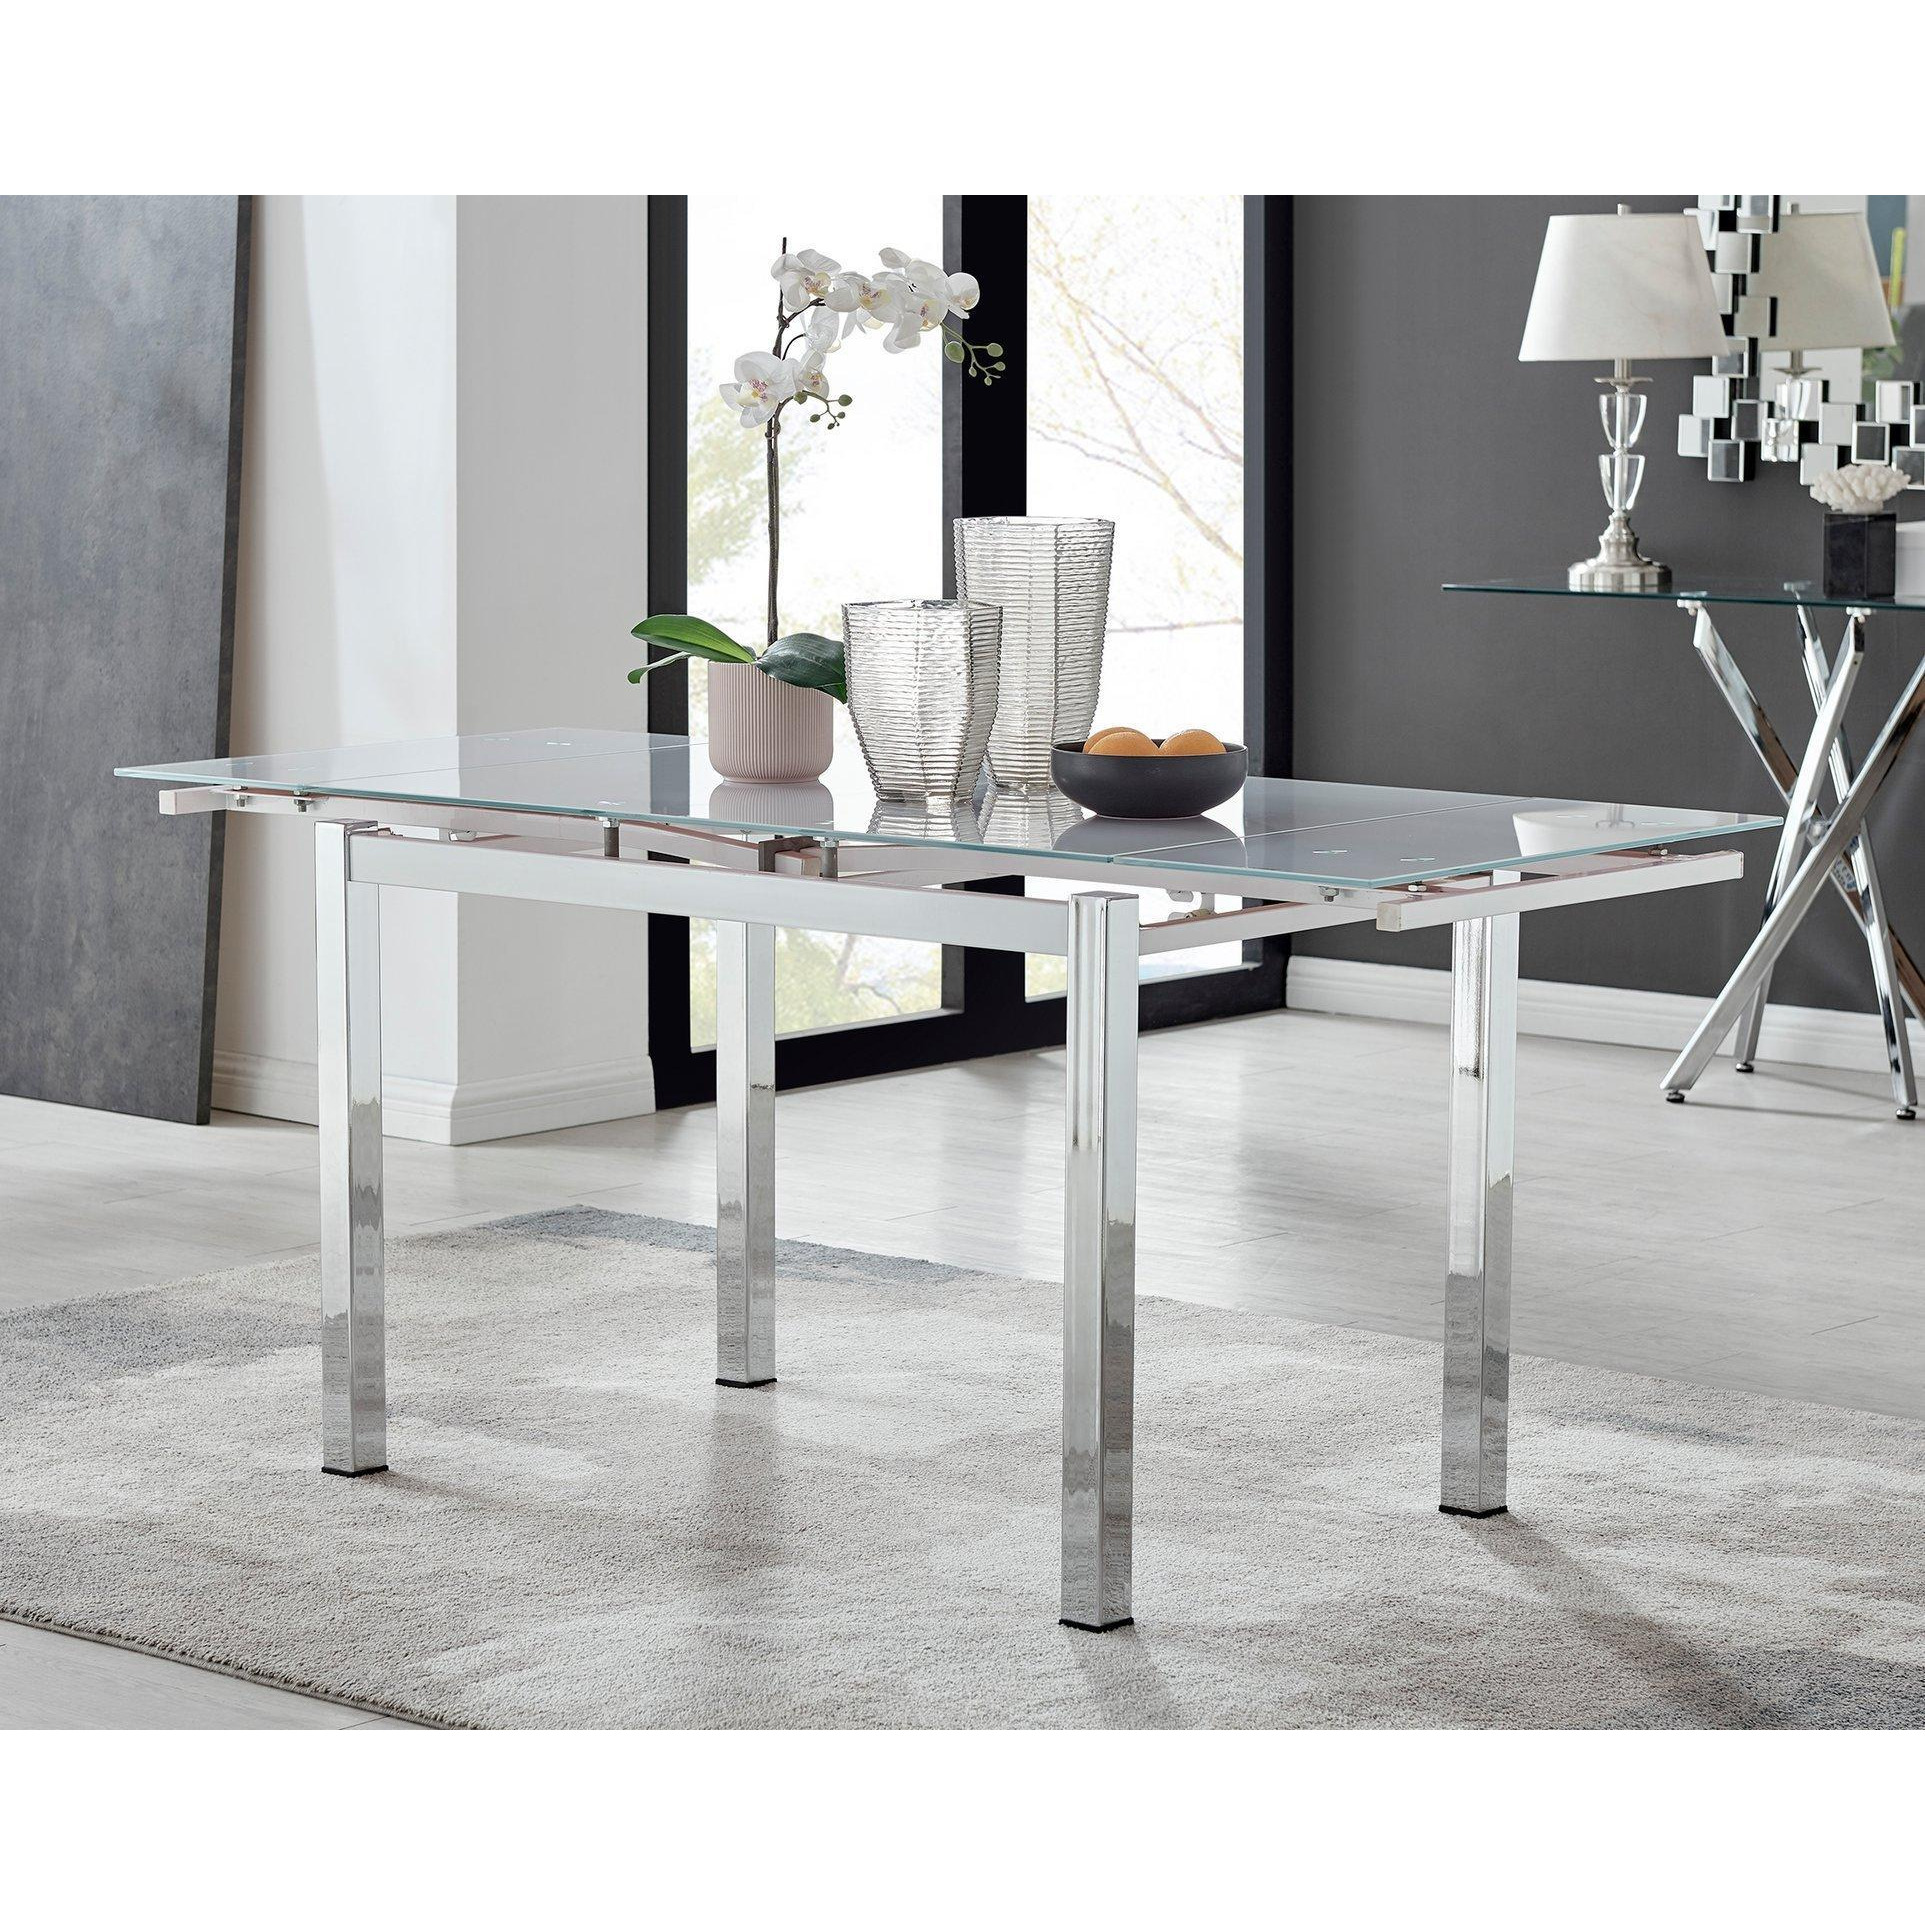 Enna 170cm 6-Seater Chrome & Glass Extending Dining Table - image 1